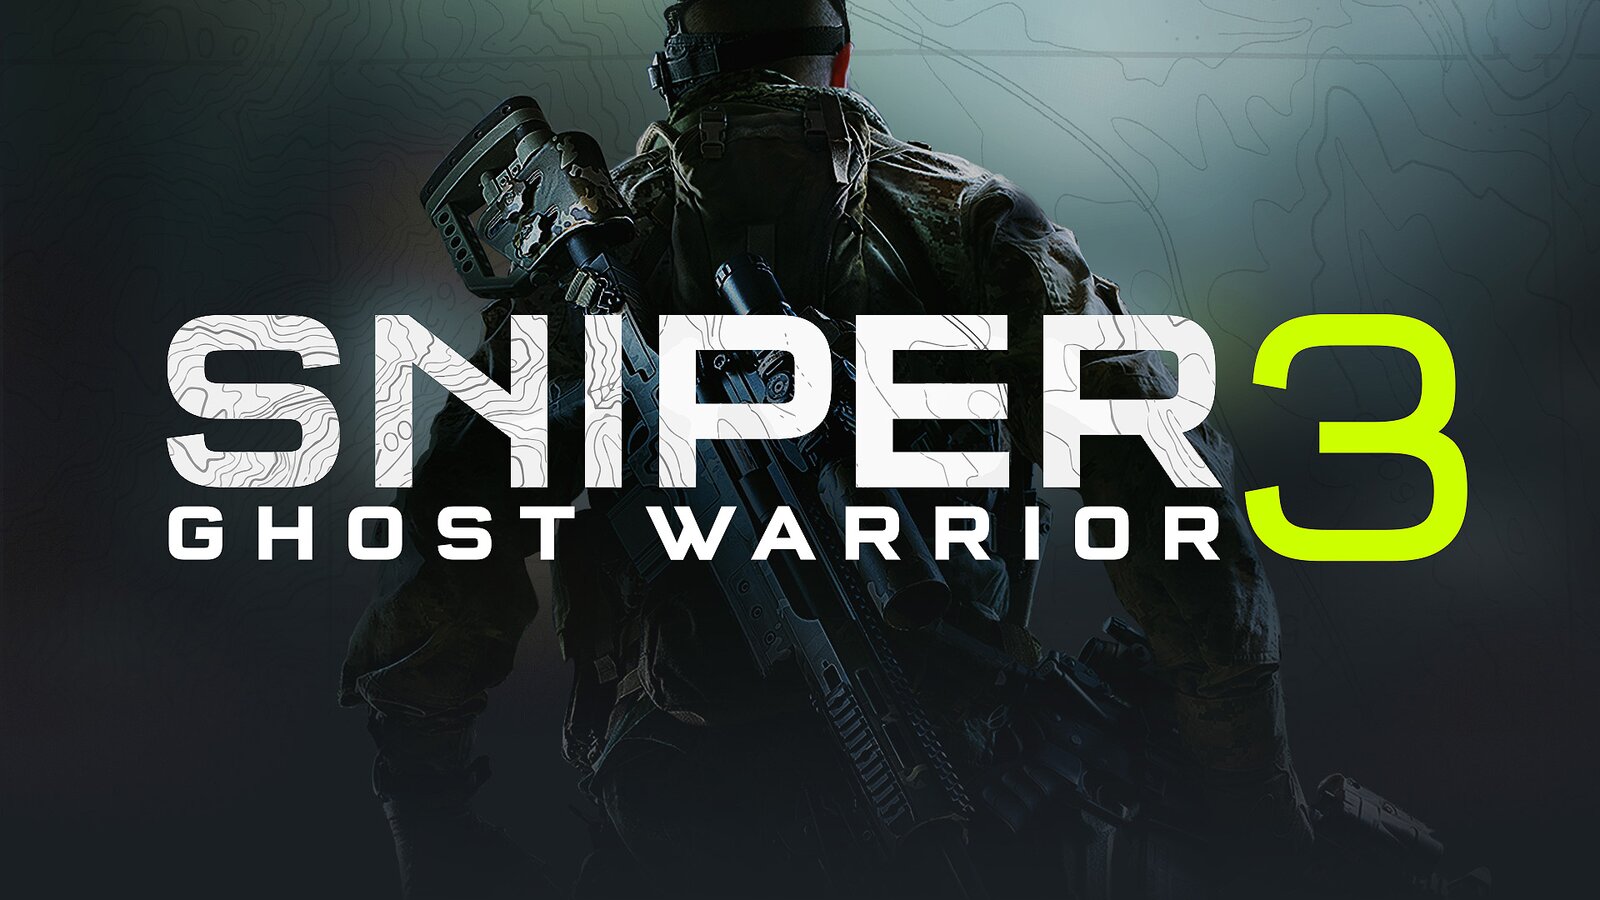 Sniper Ghost Warrior 3